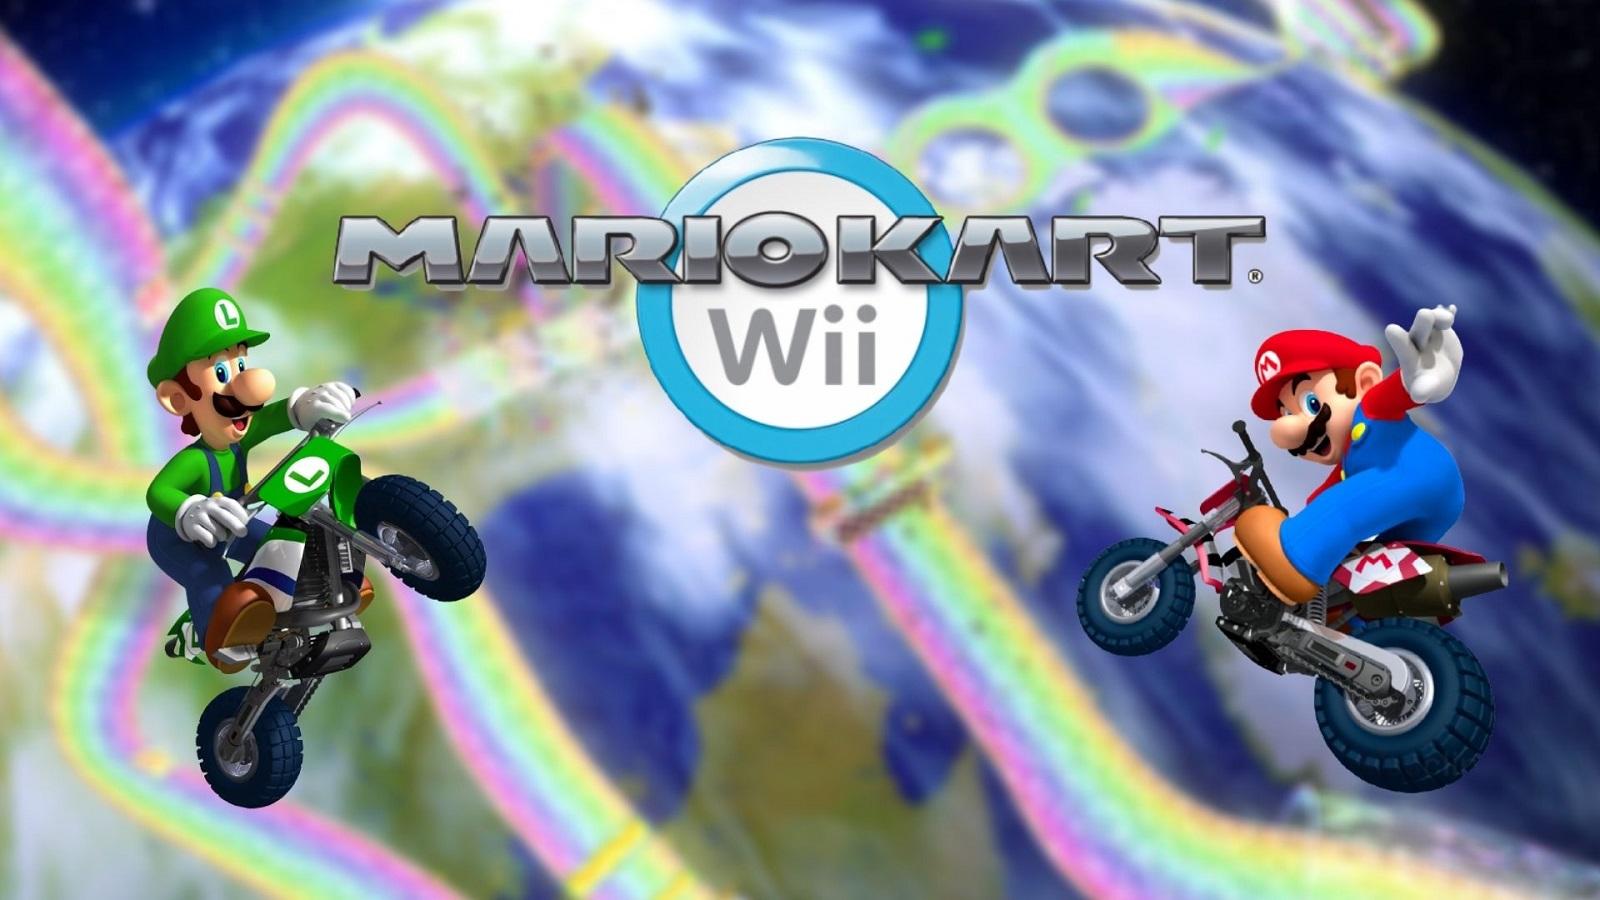 Mario Kart Wii world record smashed on Rainbow Road with insane shortcut -  Dexerto